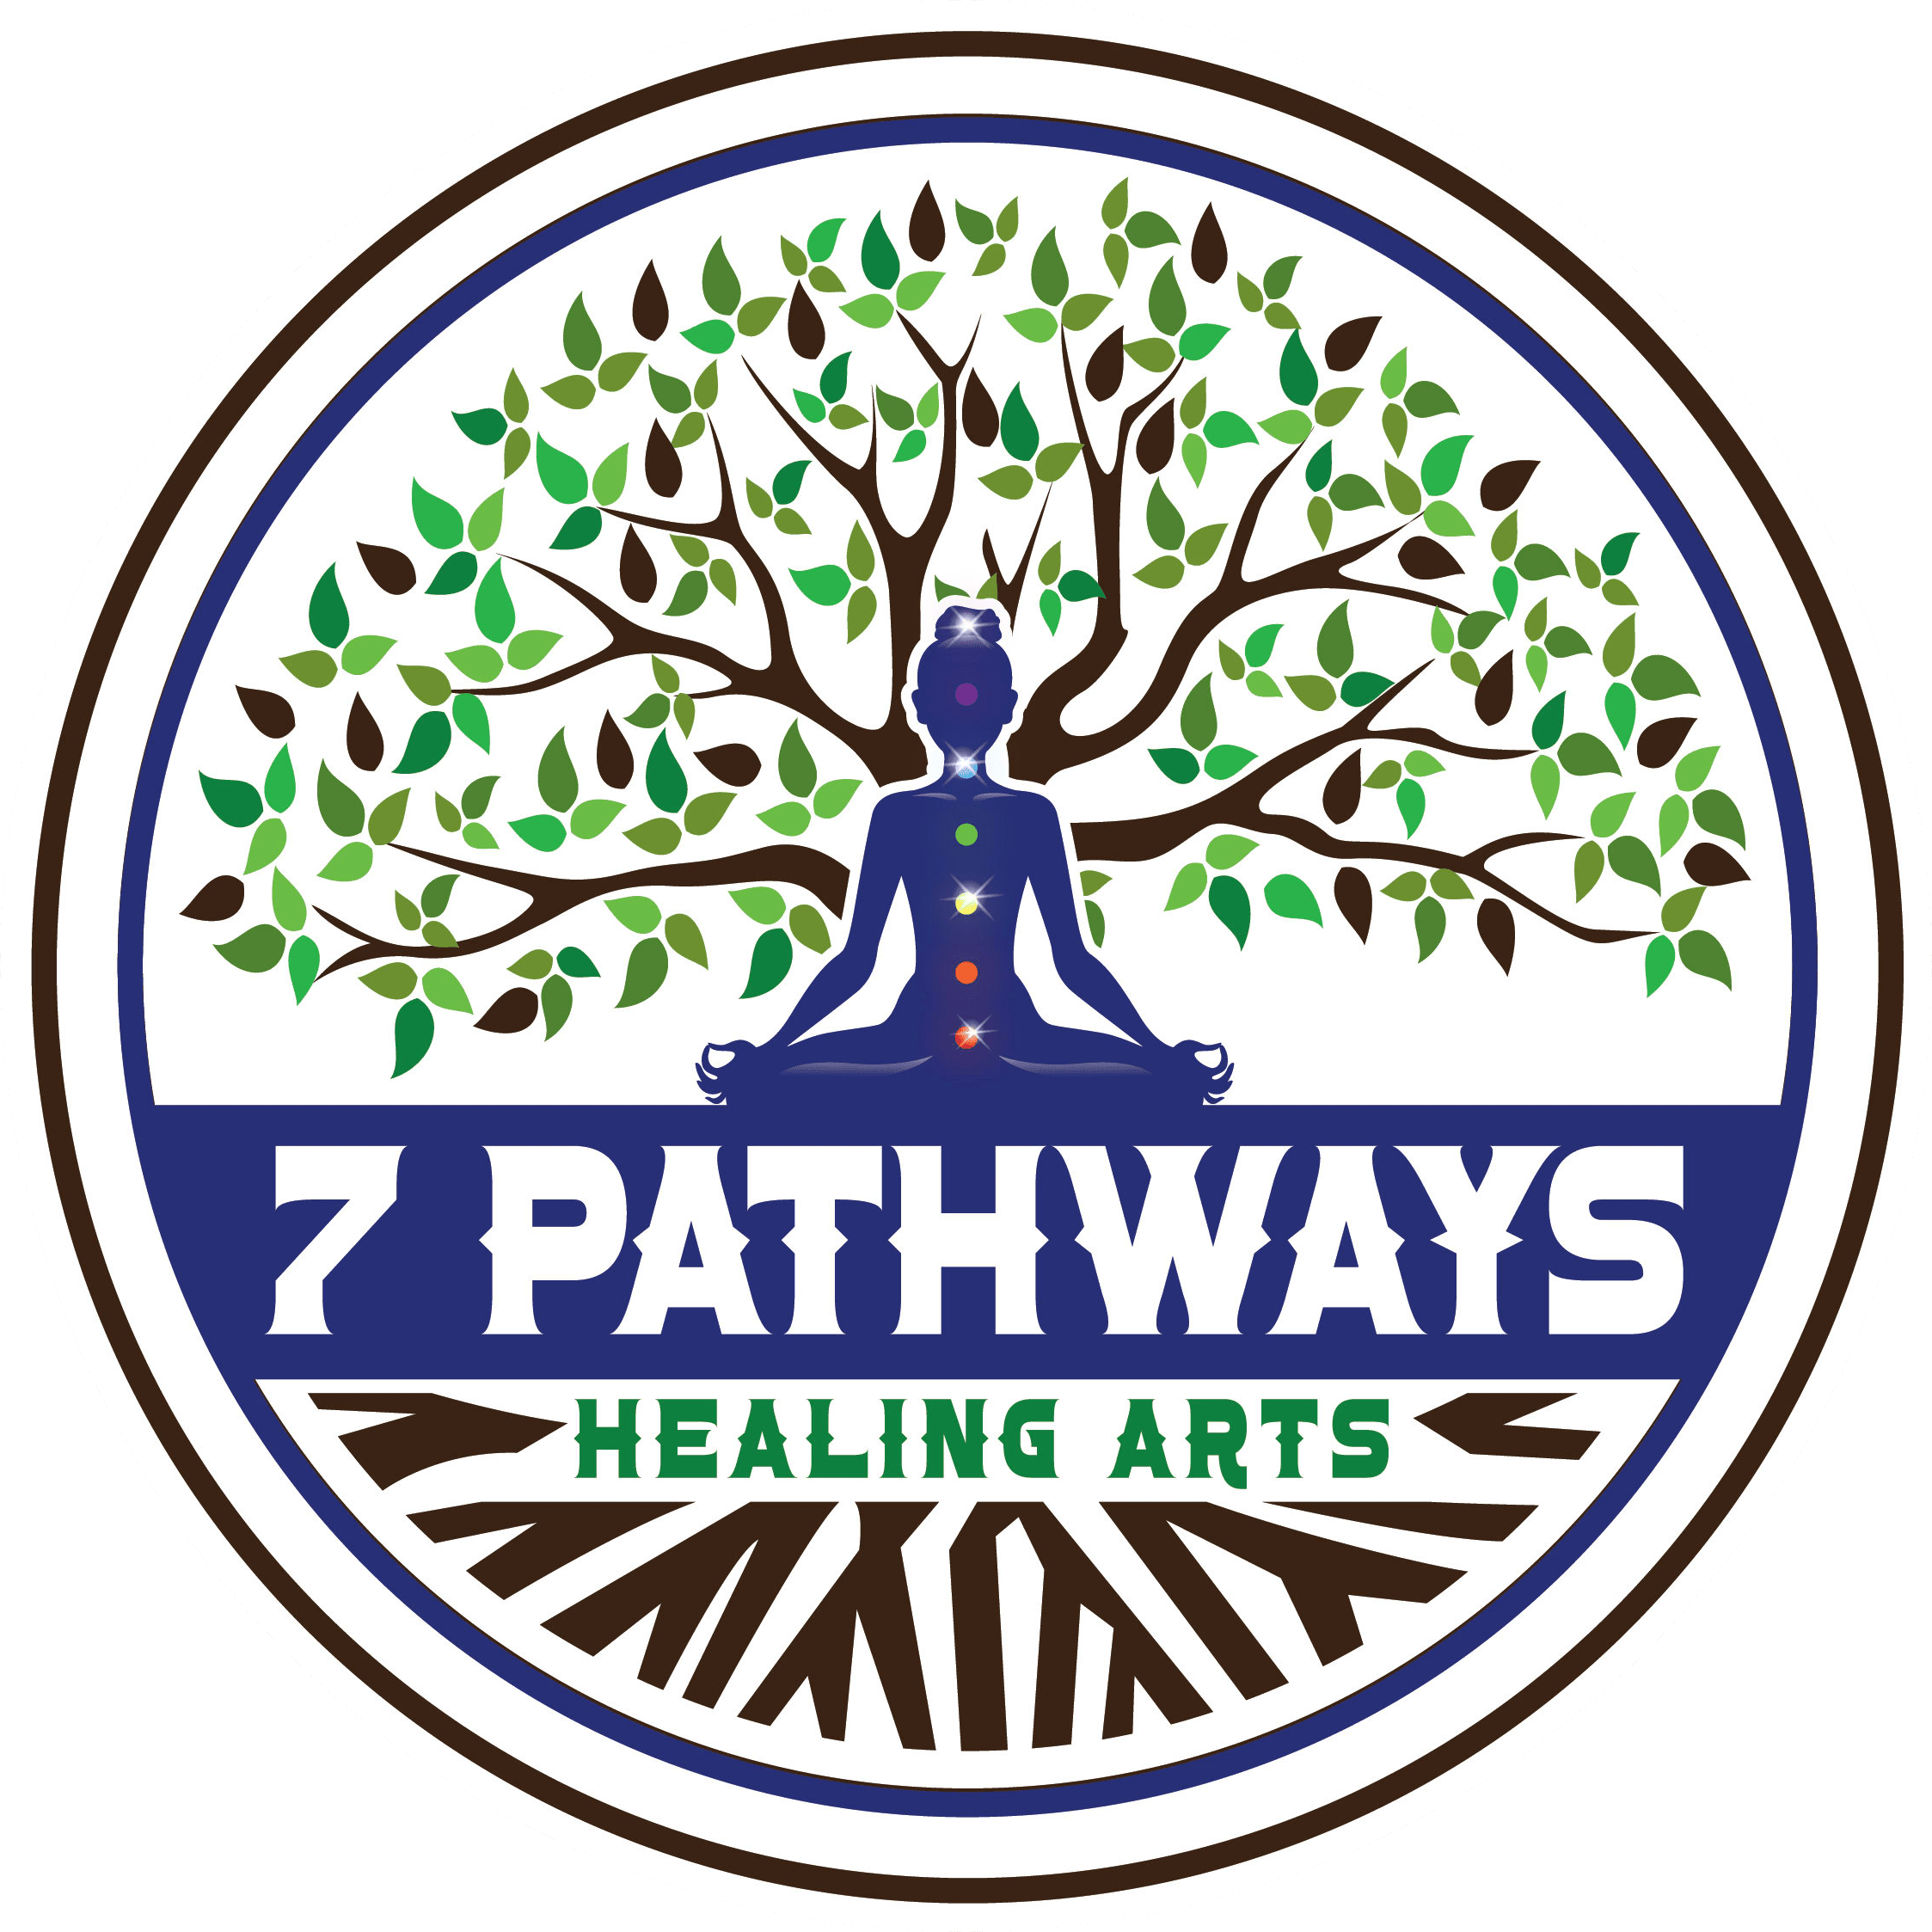 7 Pathways Healing Arts, LLC